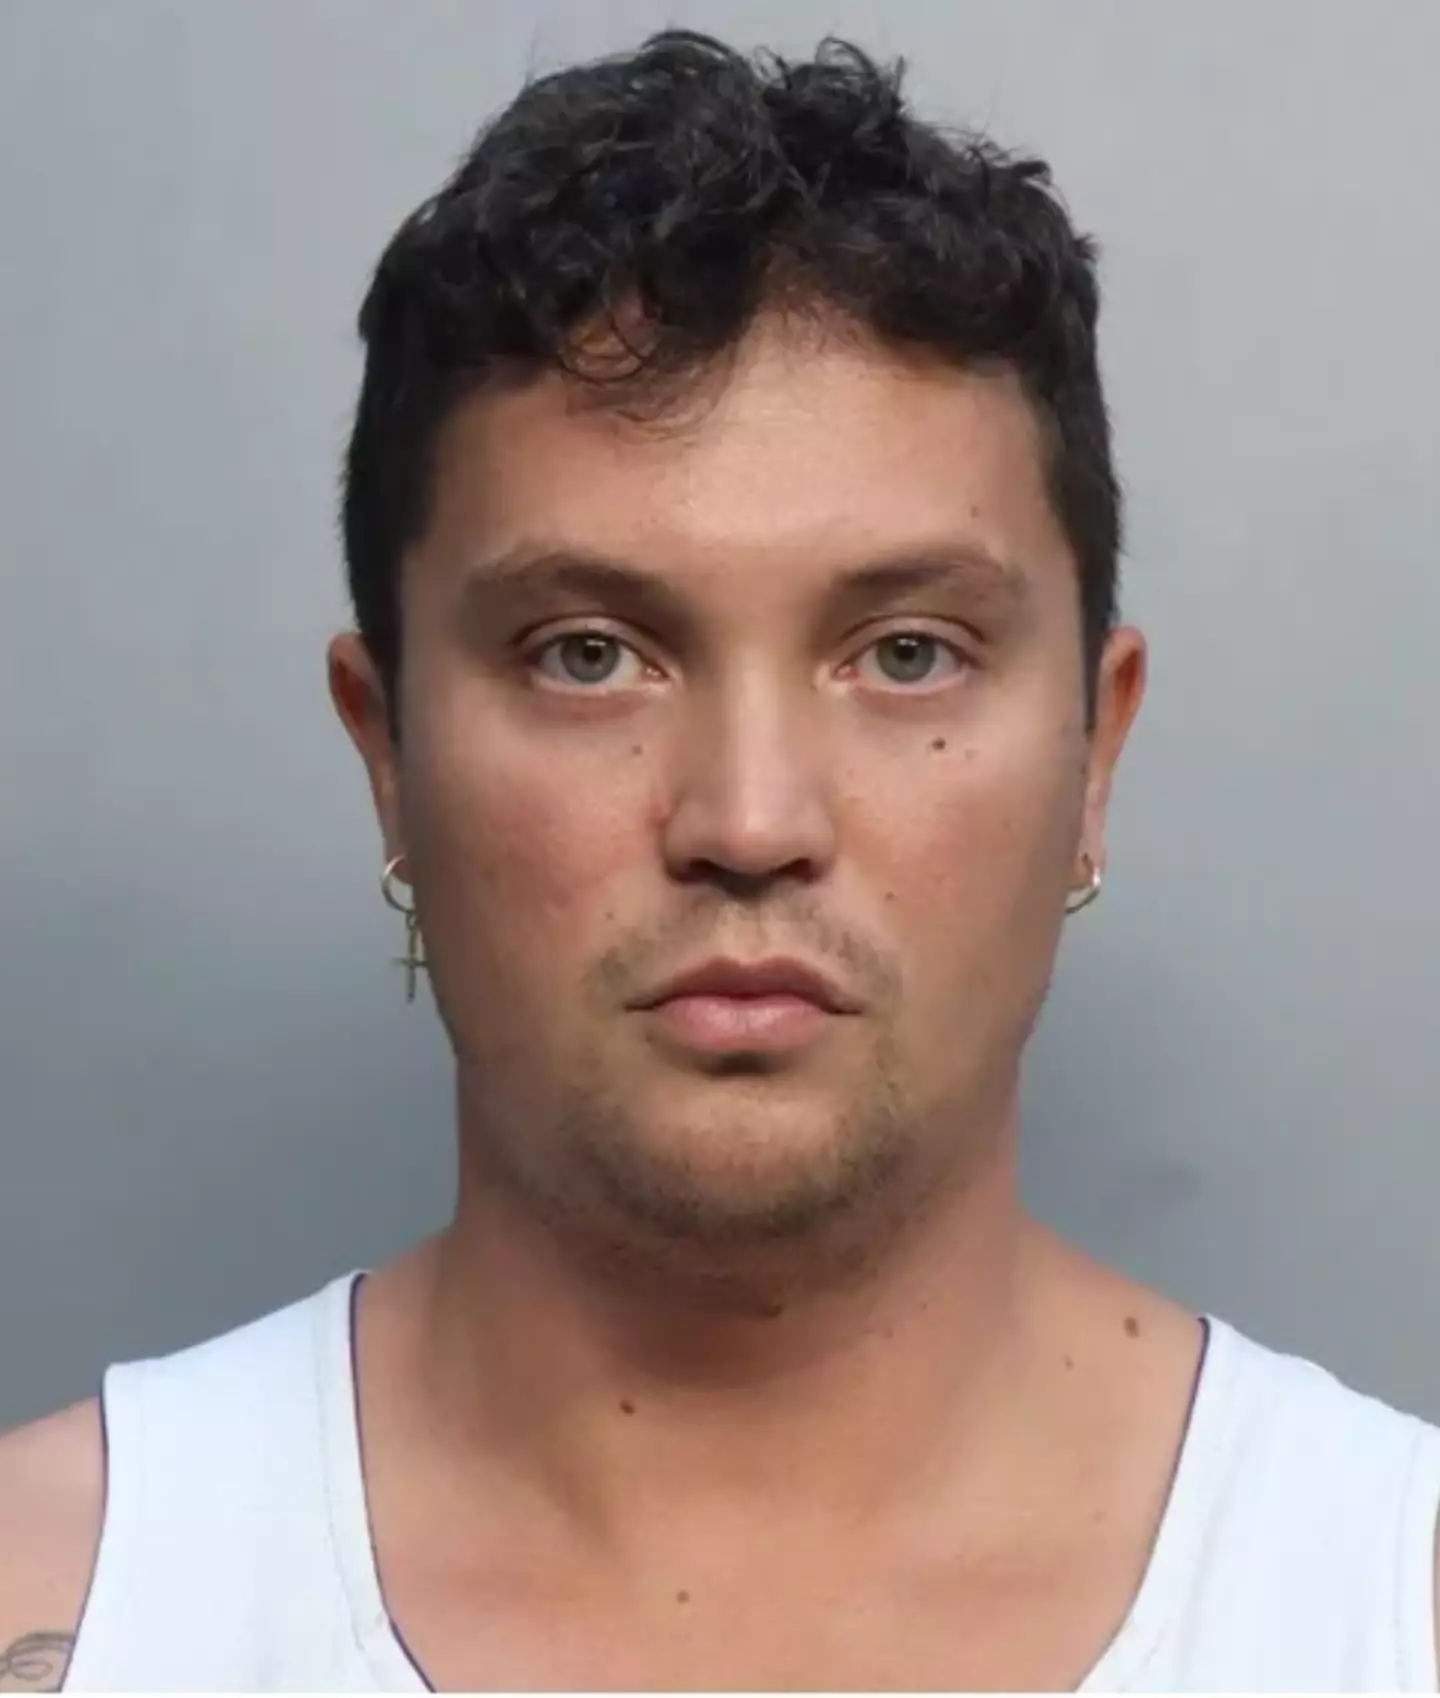 Leonardo Venegas has been arrested in relation to the alleged incident.